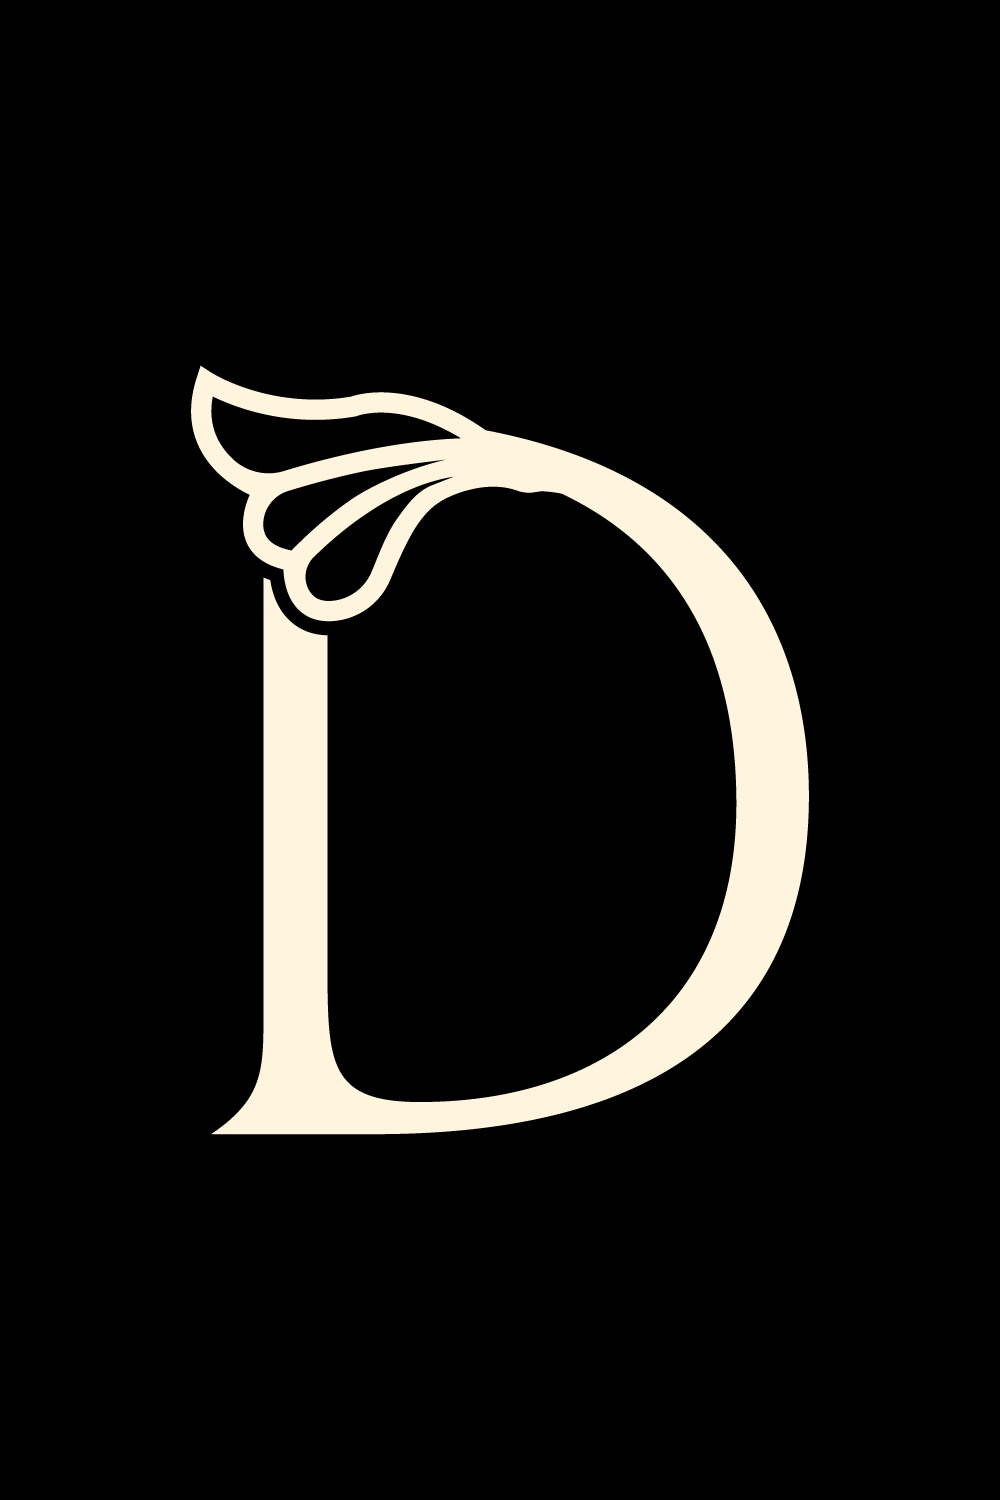 Luxury D letter logo design vector images D logo template vector arts pinterest preview image.